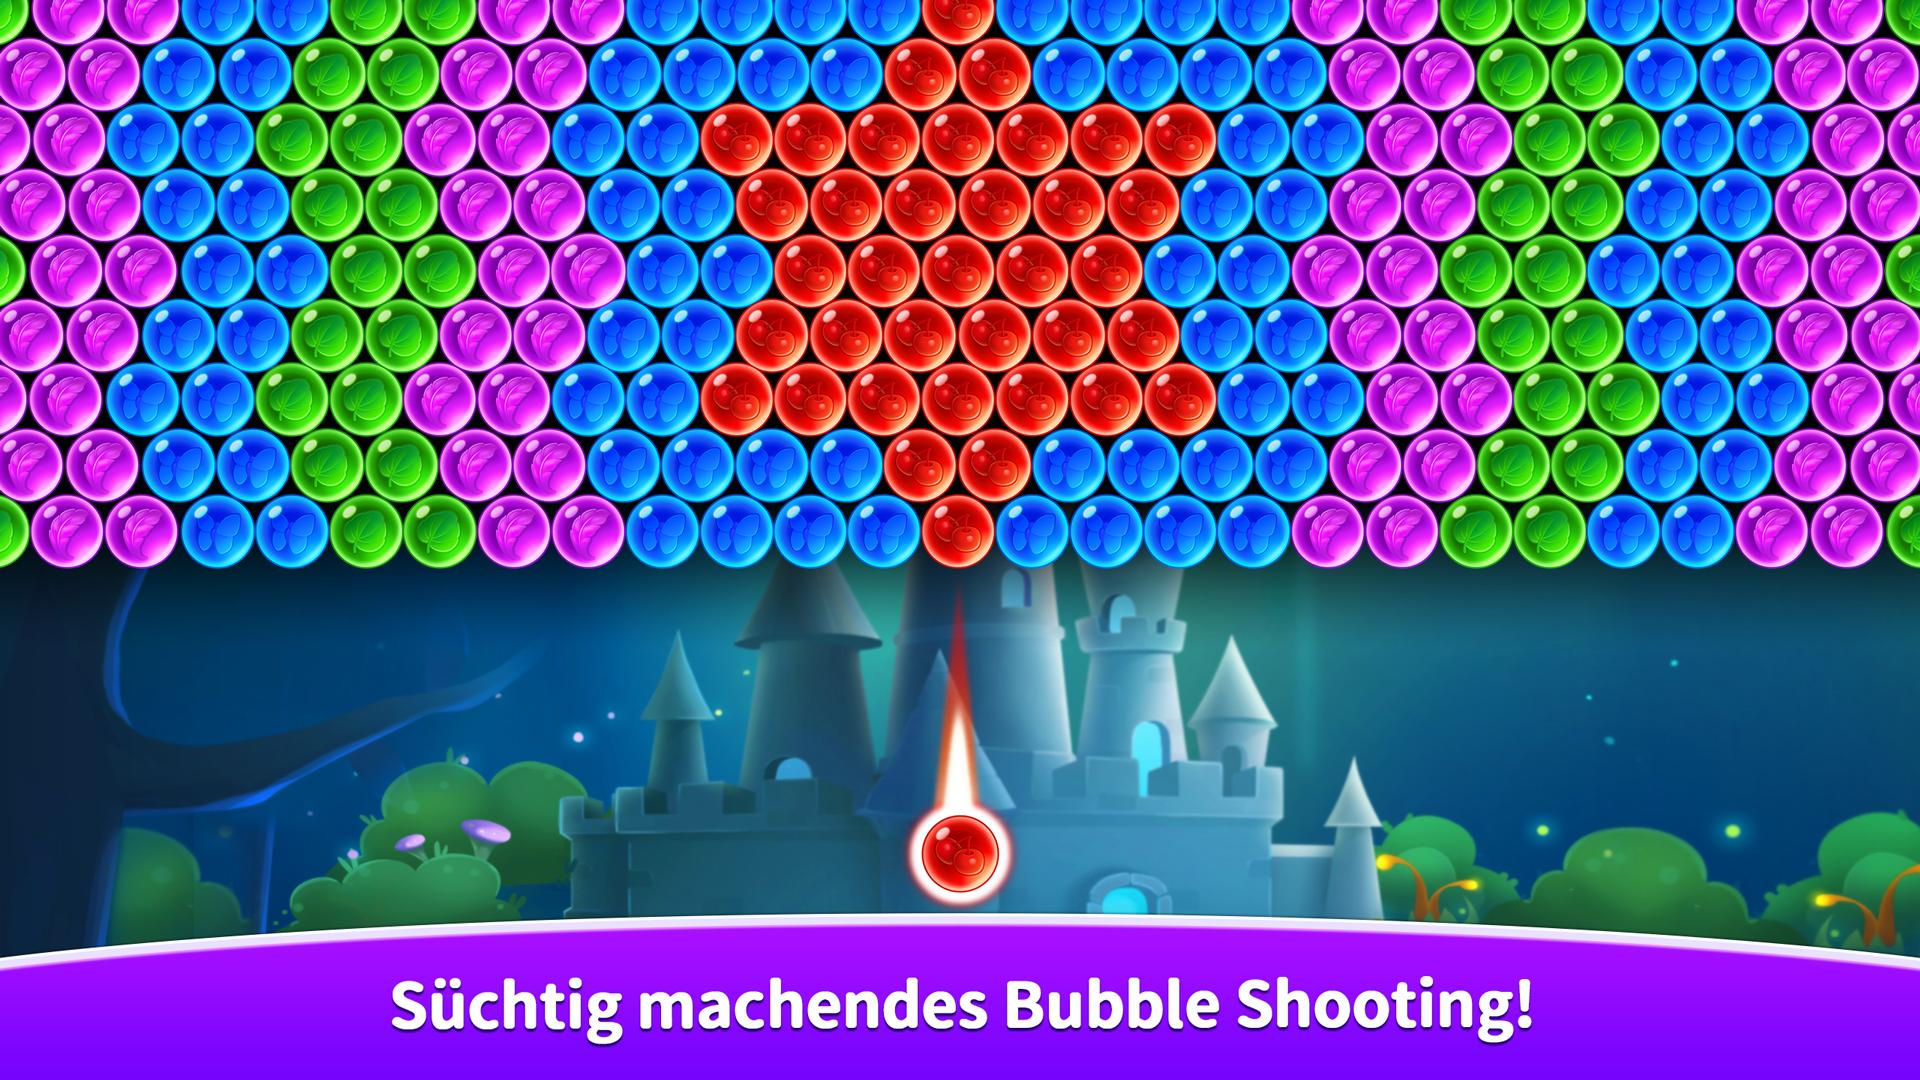 Screenshot 1 of Bubble Spiele - Bubble Shooter 2.78.0